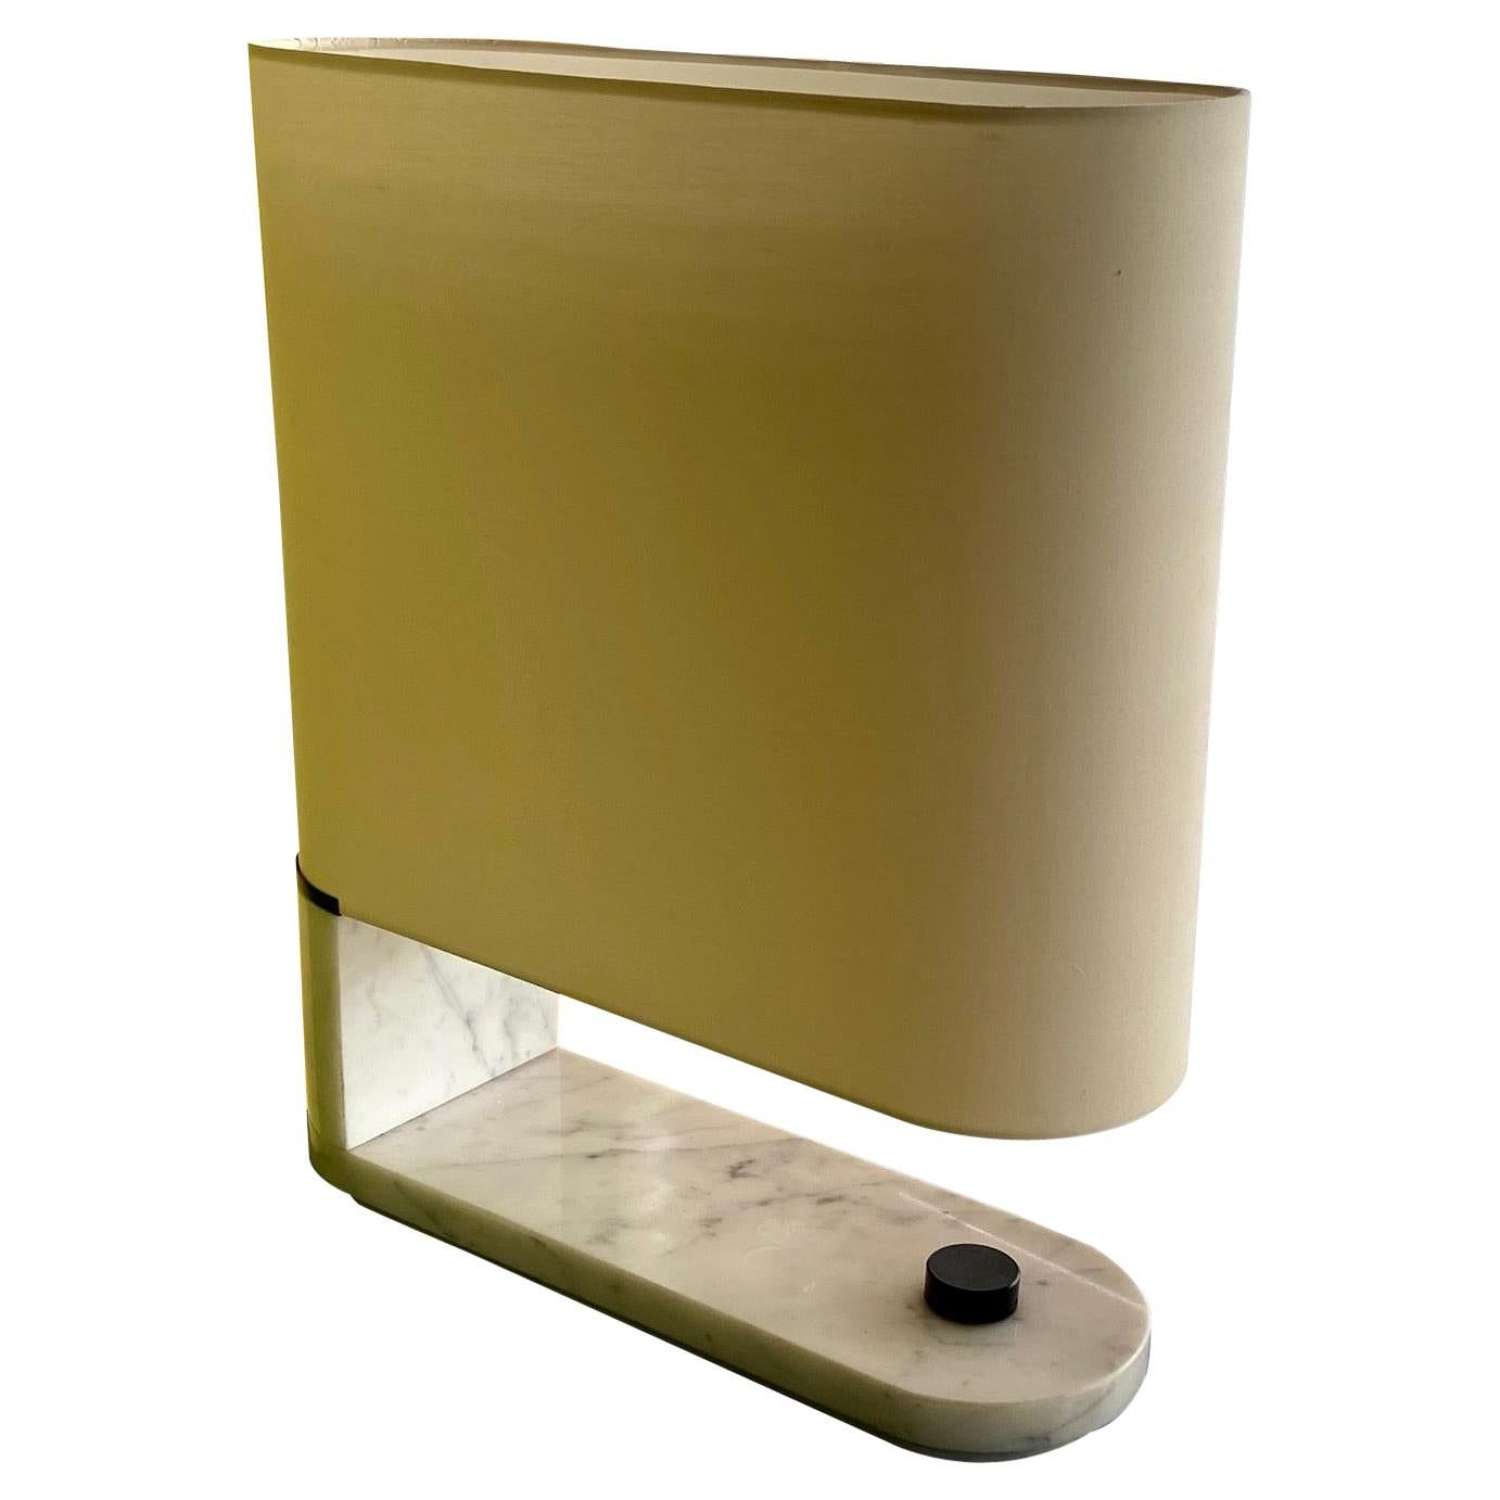 1960's to 1970's Large Stilnovo Oval Marble Table or Desk Lamp, Label